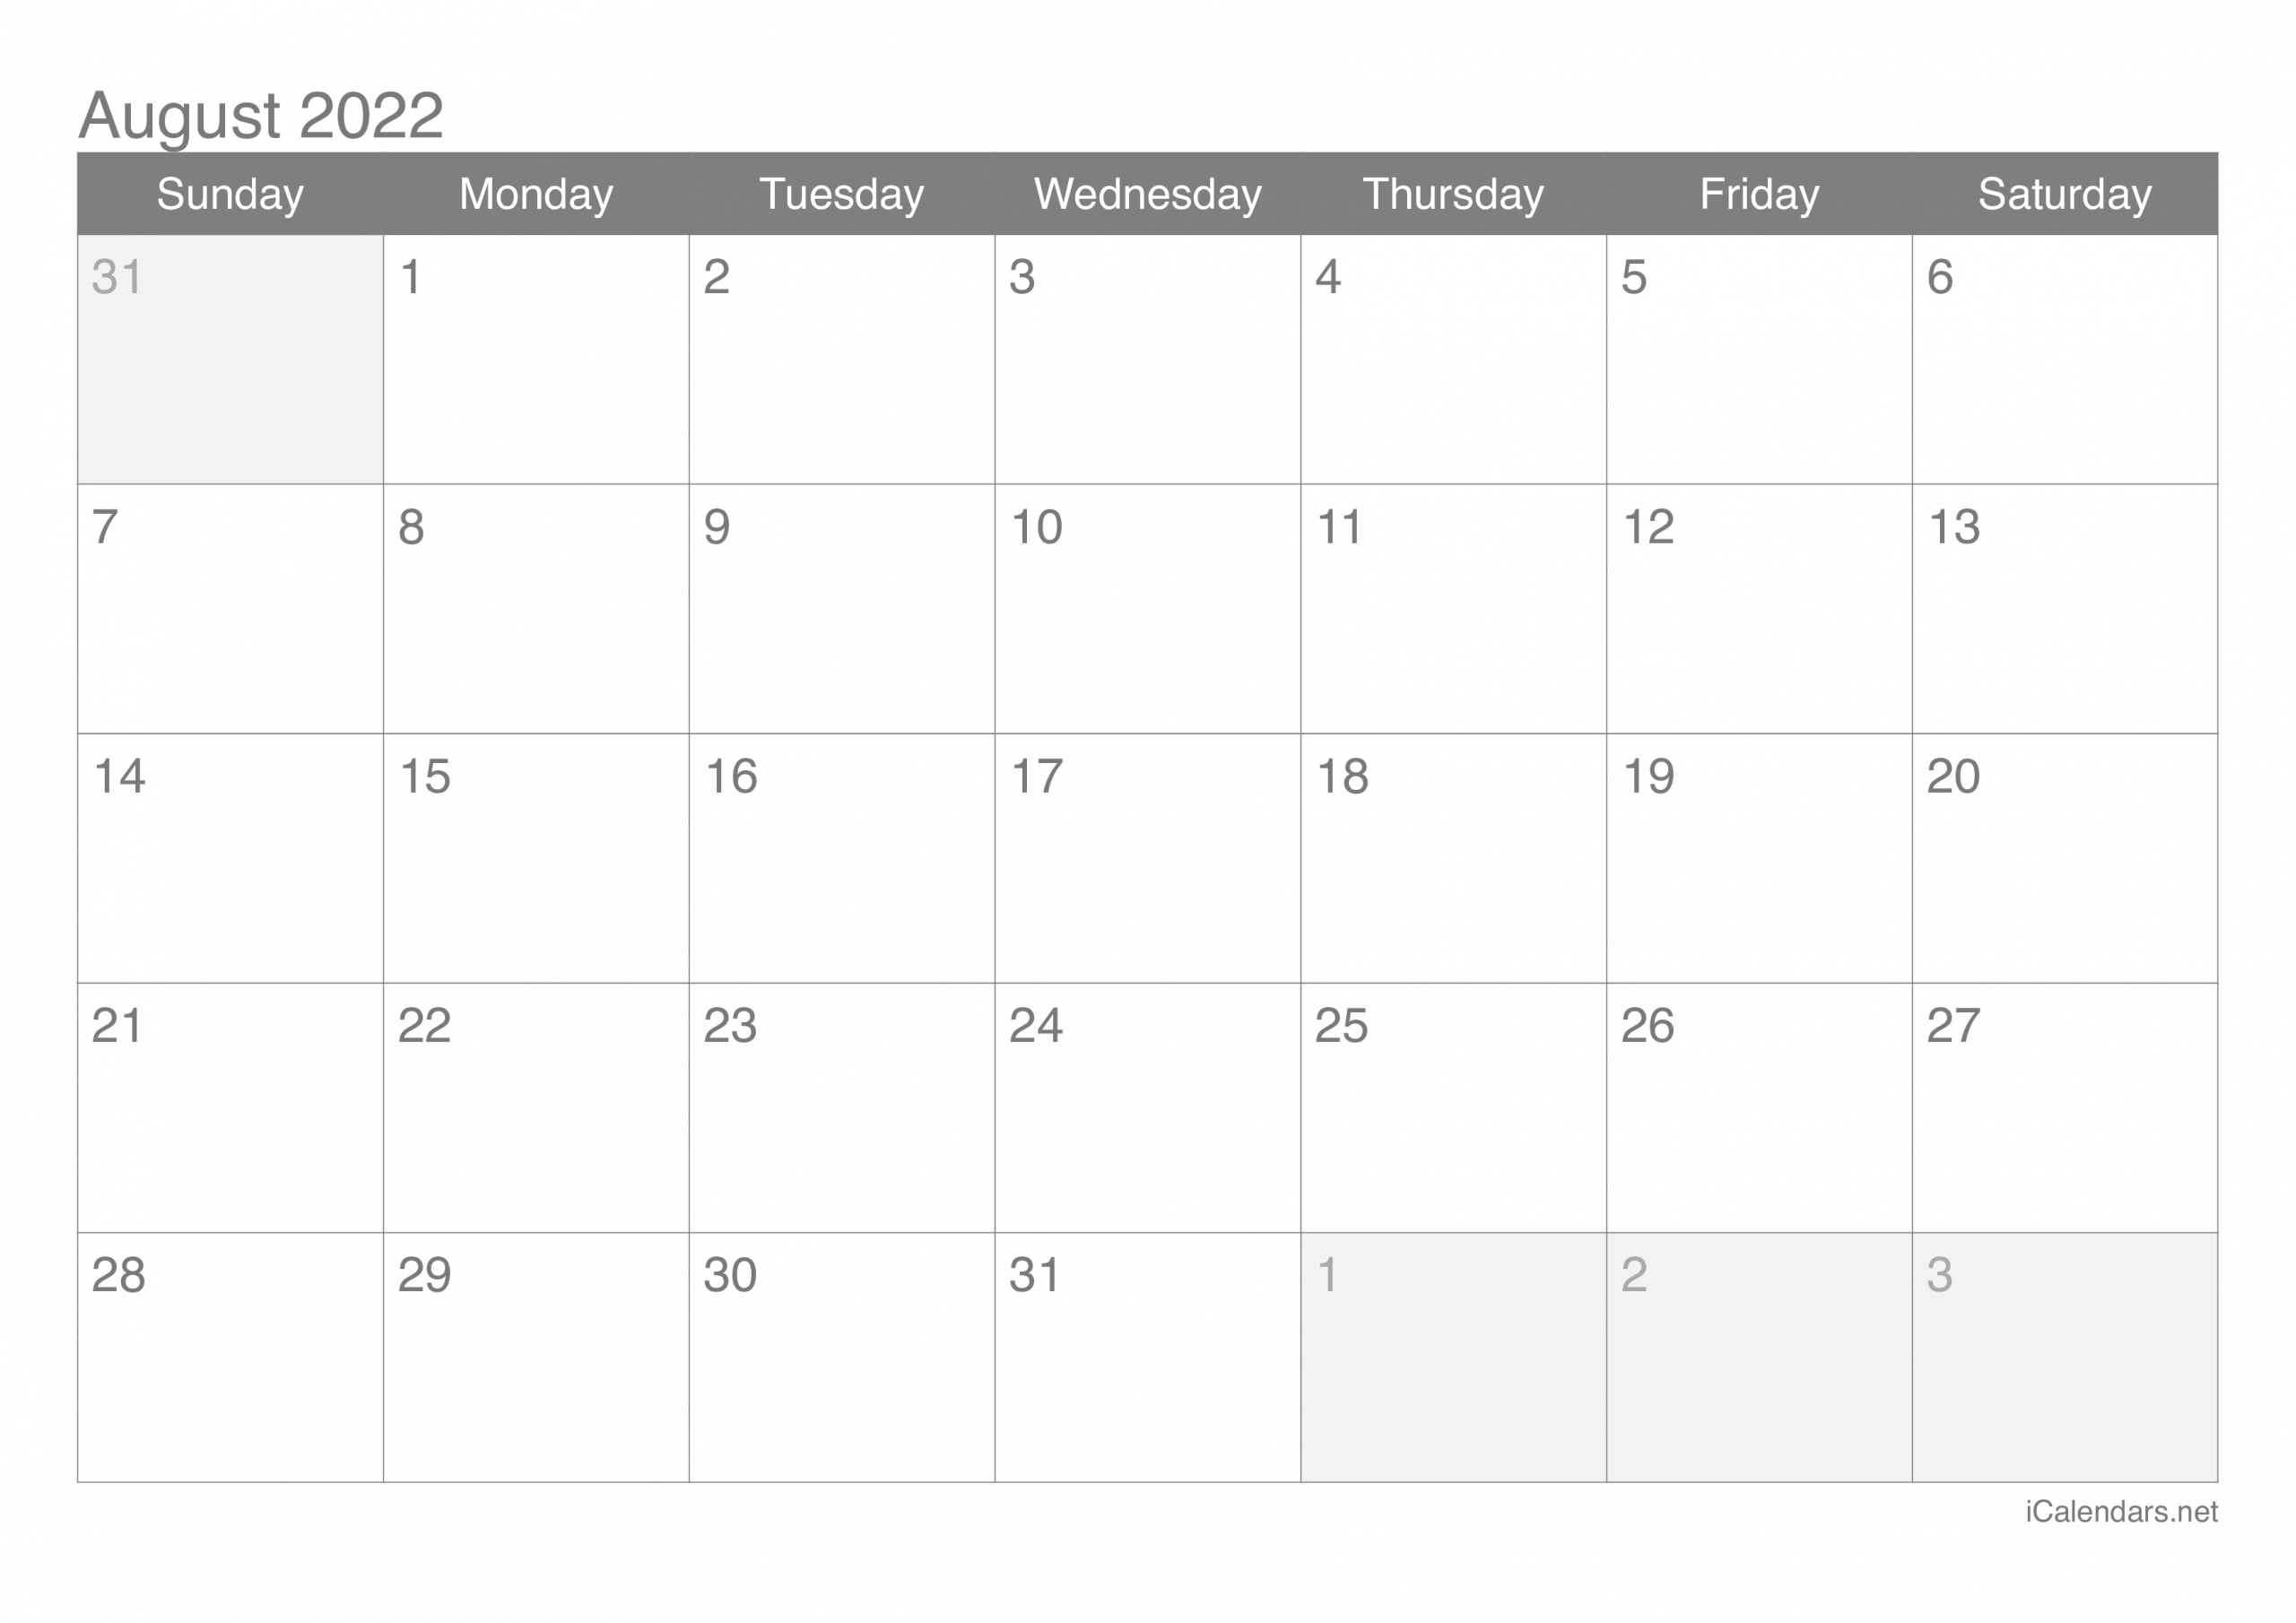 August 2022 Printable Calendar - Icalendars